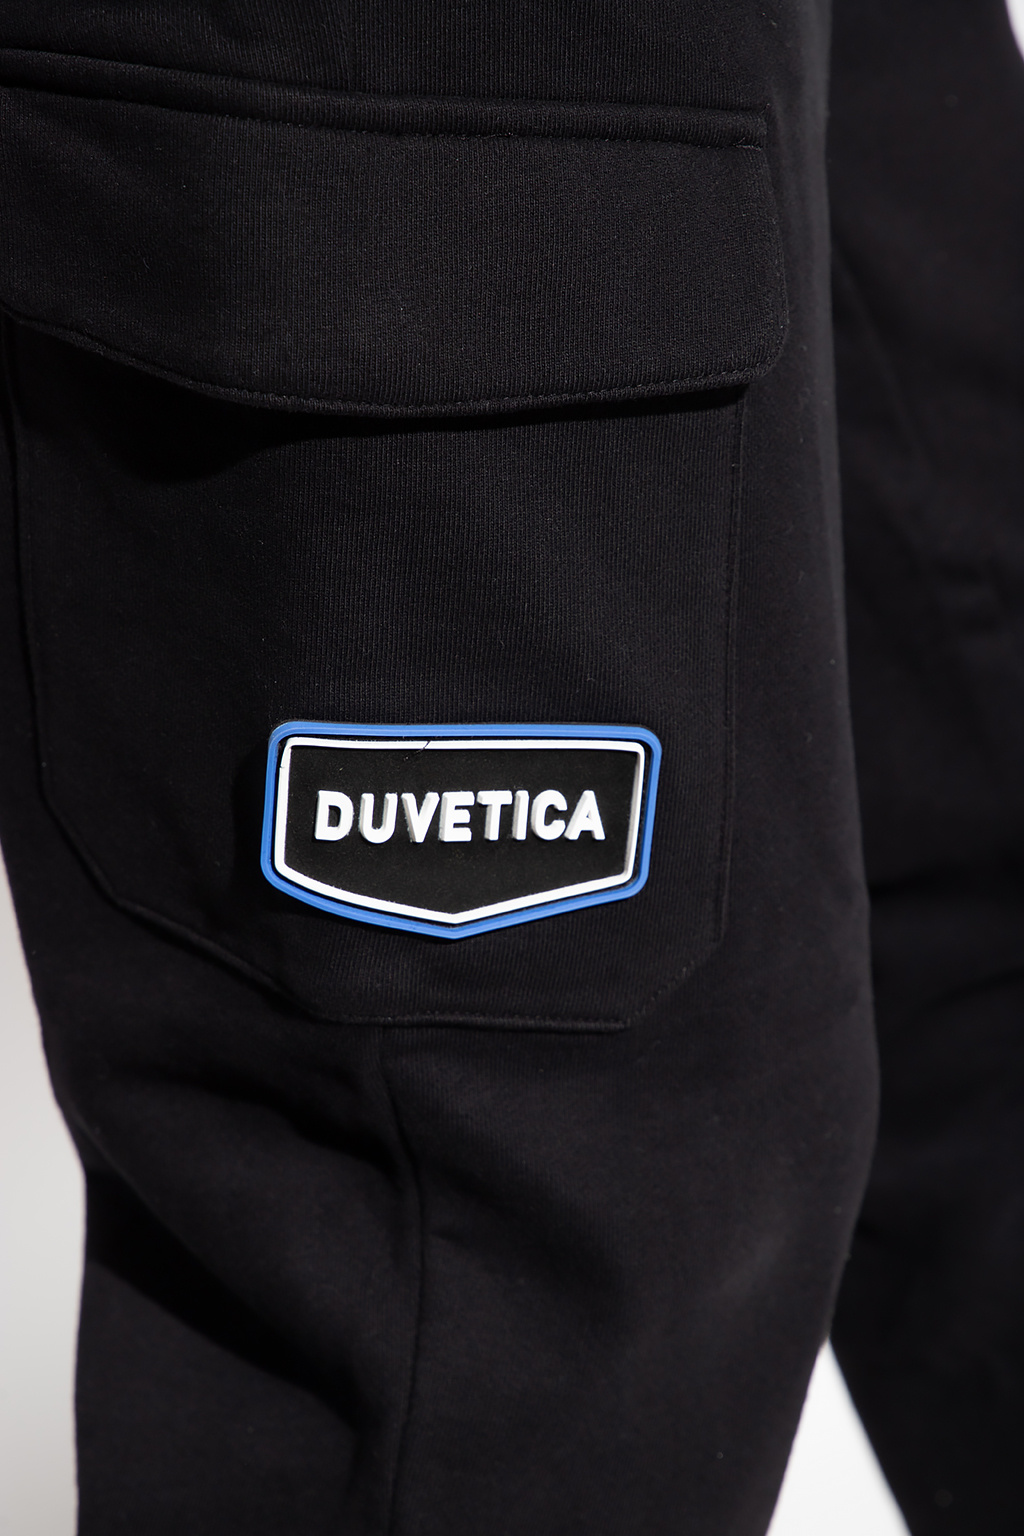 Duvetica ‘Forlino’ sweatpants